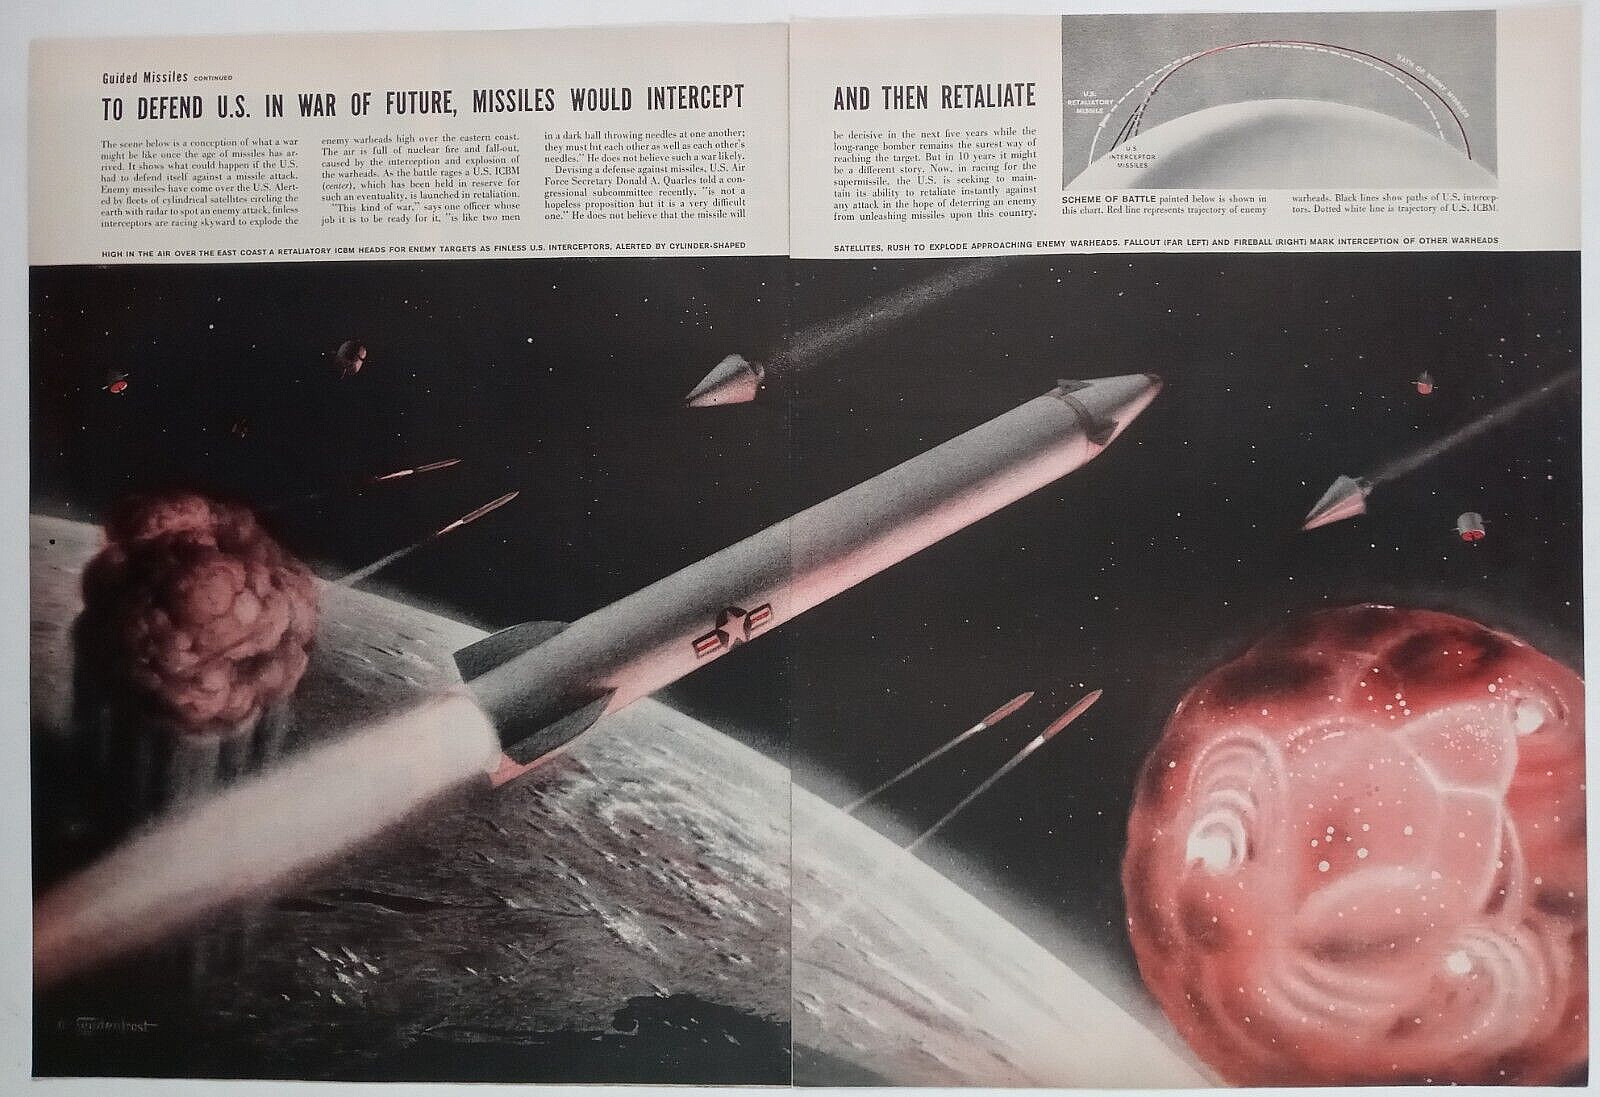 USA Future Defend Missile Intercept Retaliate Colorful Vintage Poster Print Ad